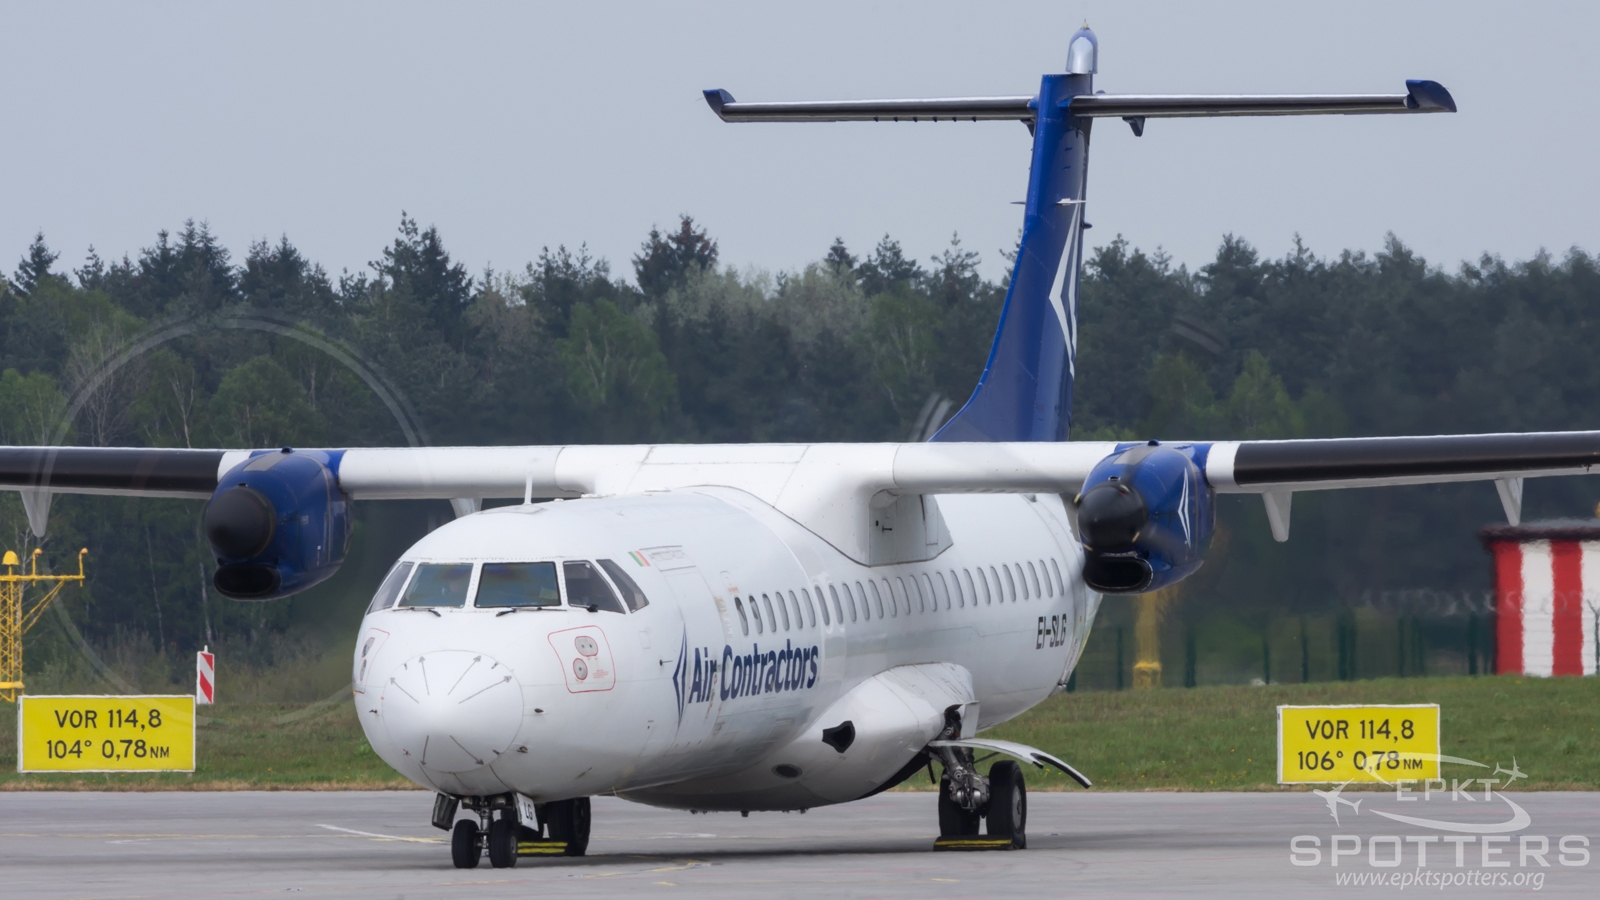 EI-SLG - ATR 72 -202(F) (Air Contractors) / Pyrzowice - Katowice Poland [EPKT/KTW]